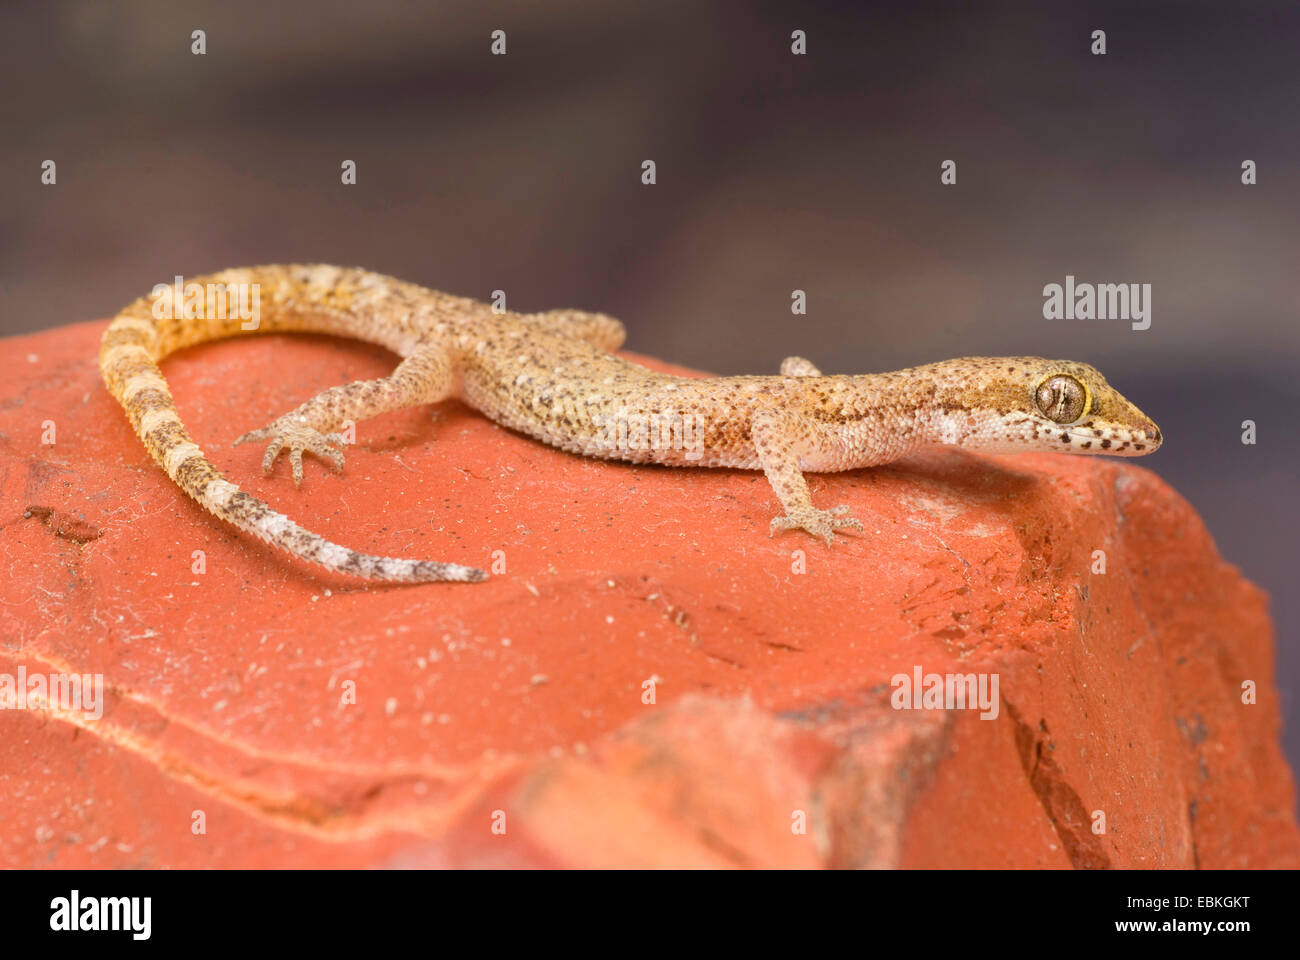 Northern Sand Gecko, Tripoli Gecko (Tropiocolotes tripolitanus), side view Stock Photo